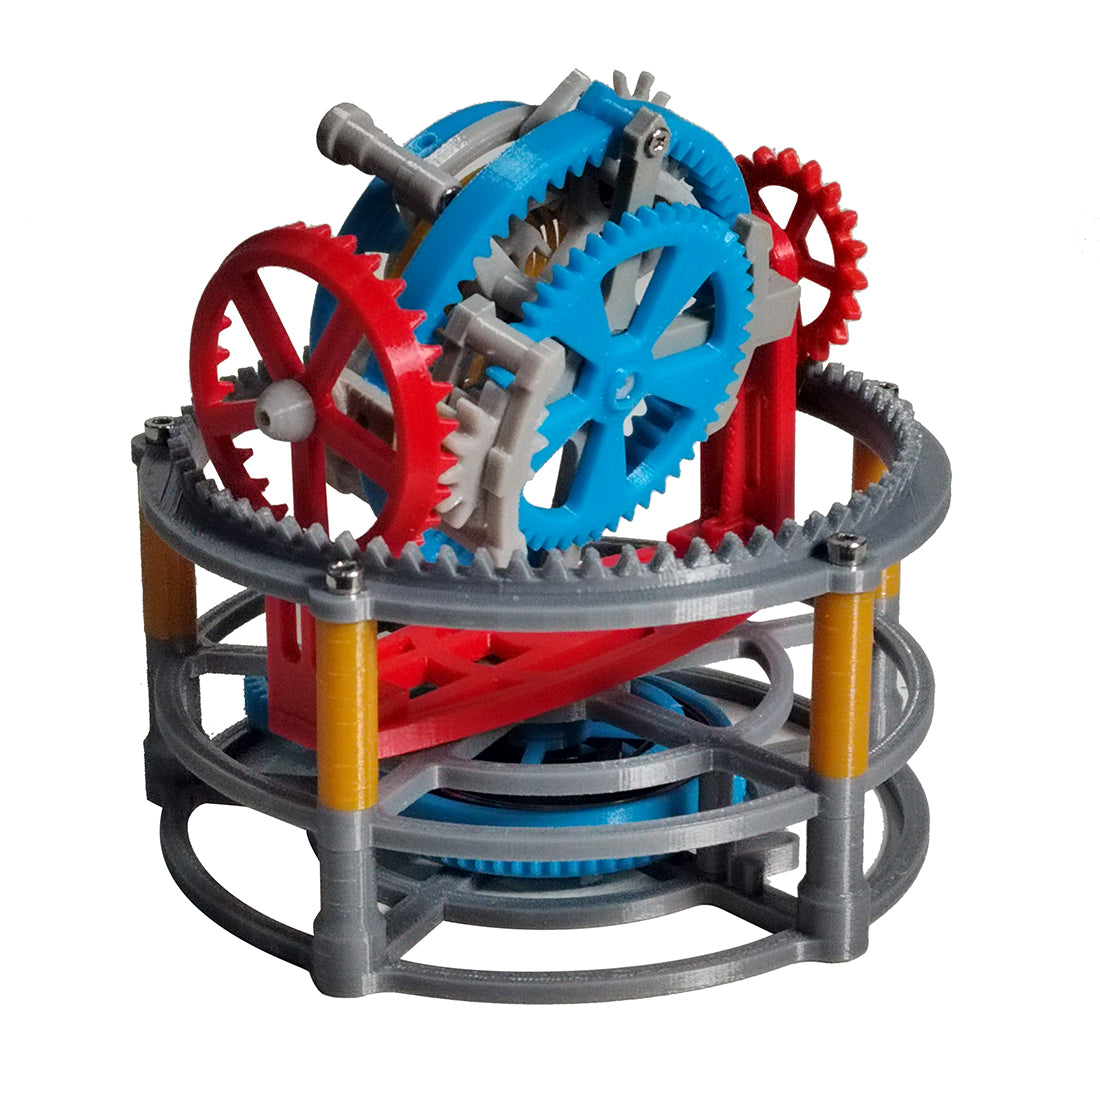 3D Printed Tourbillon Mechanical Clock